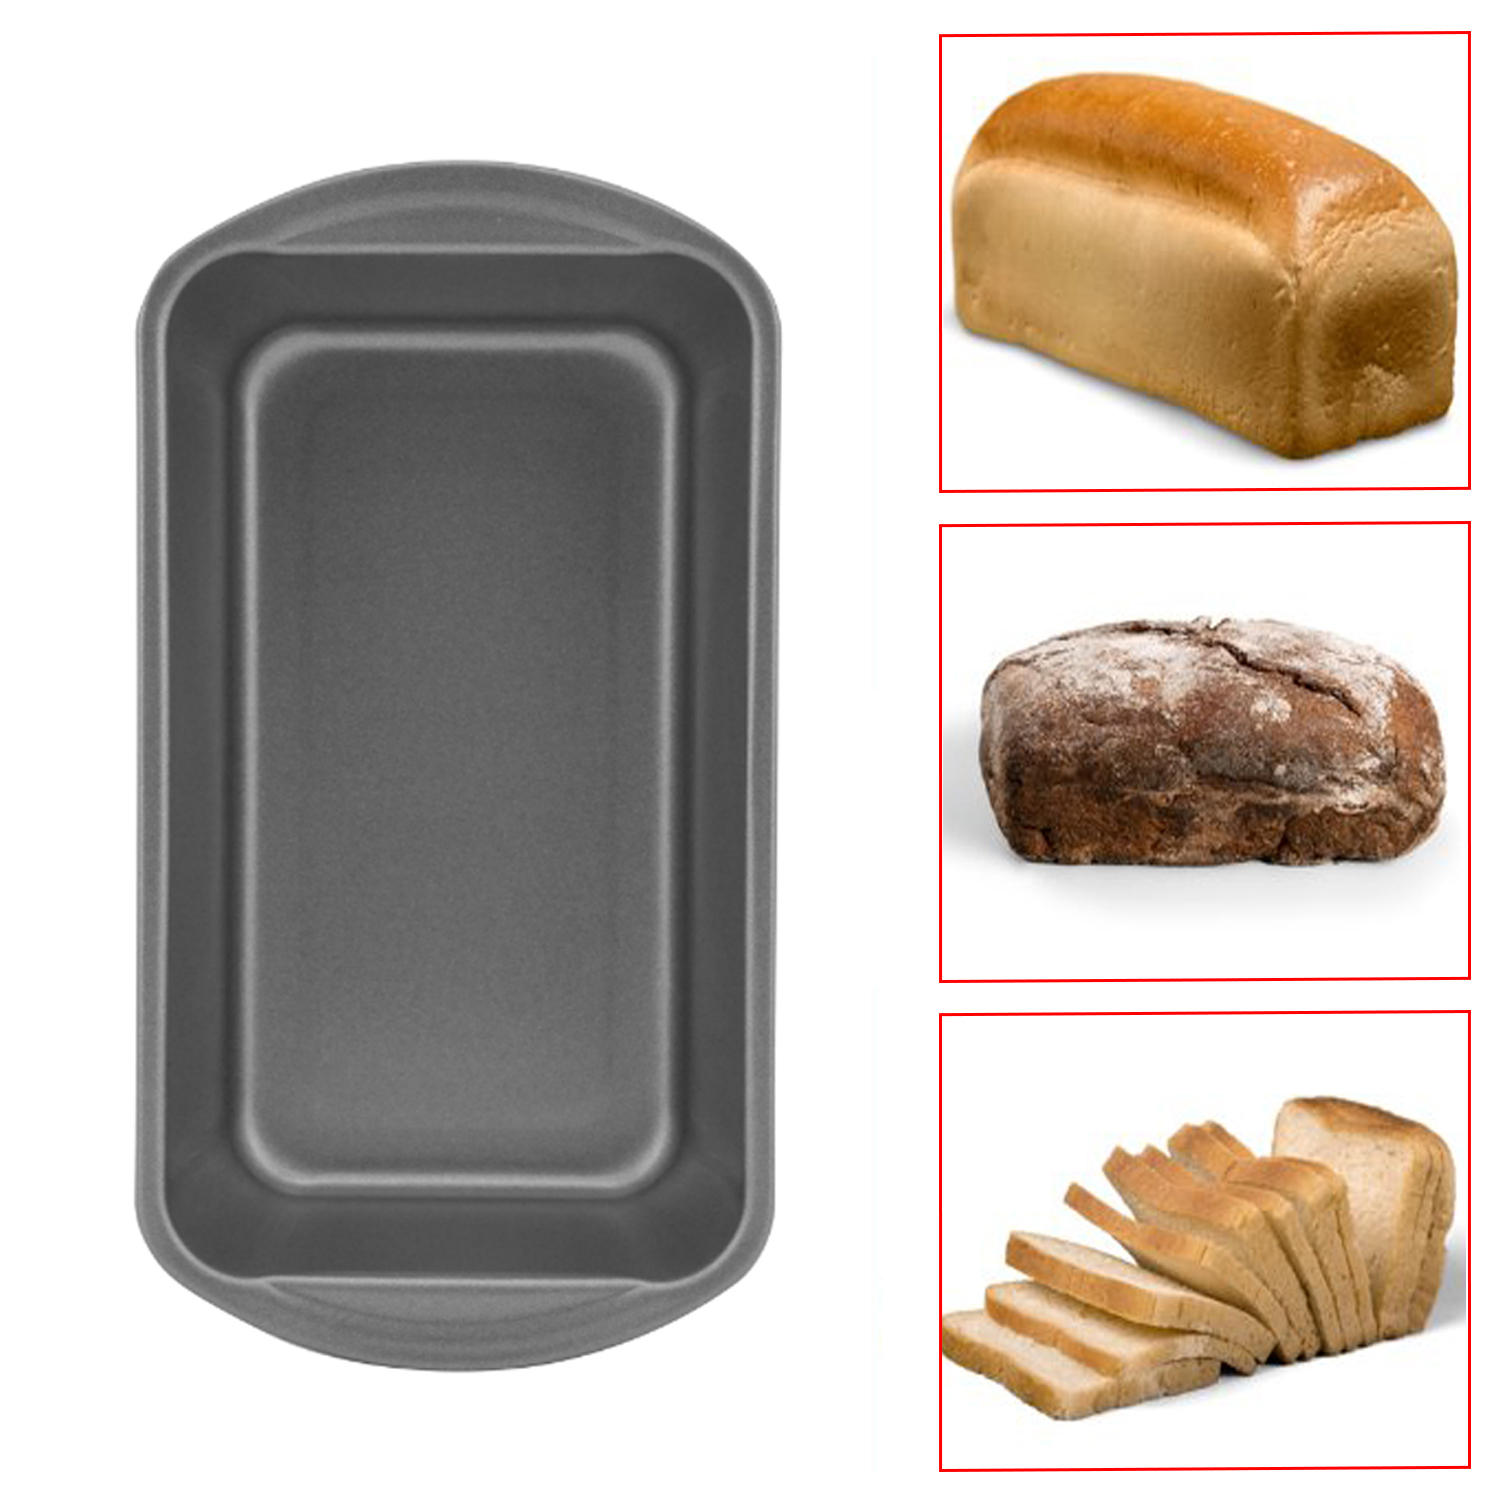 1 molde para Pan rectangular, molde para Pan tostado, molde para pastel, molde para Pan de acero al carbono, utensilios para hornear, herramienta rectangular antiadherente